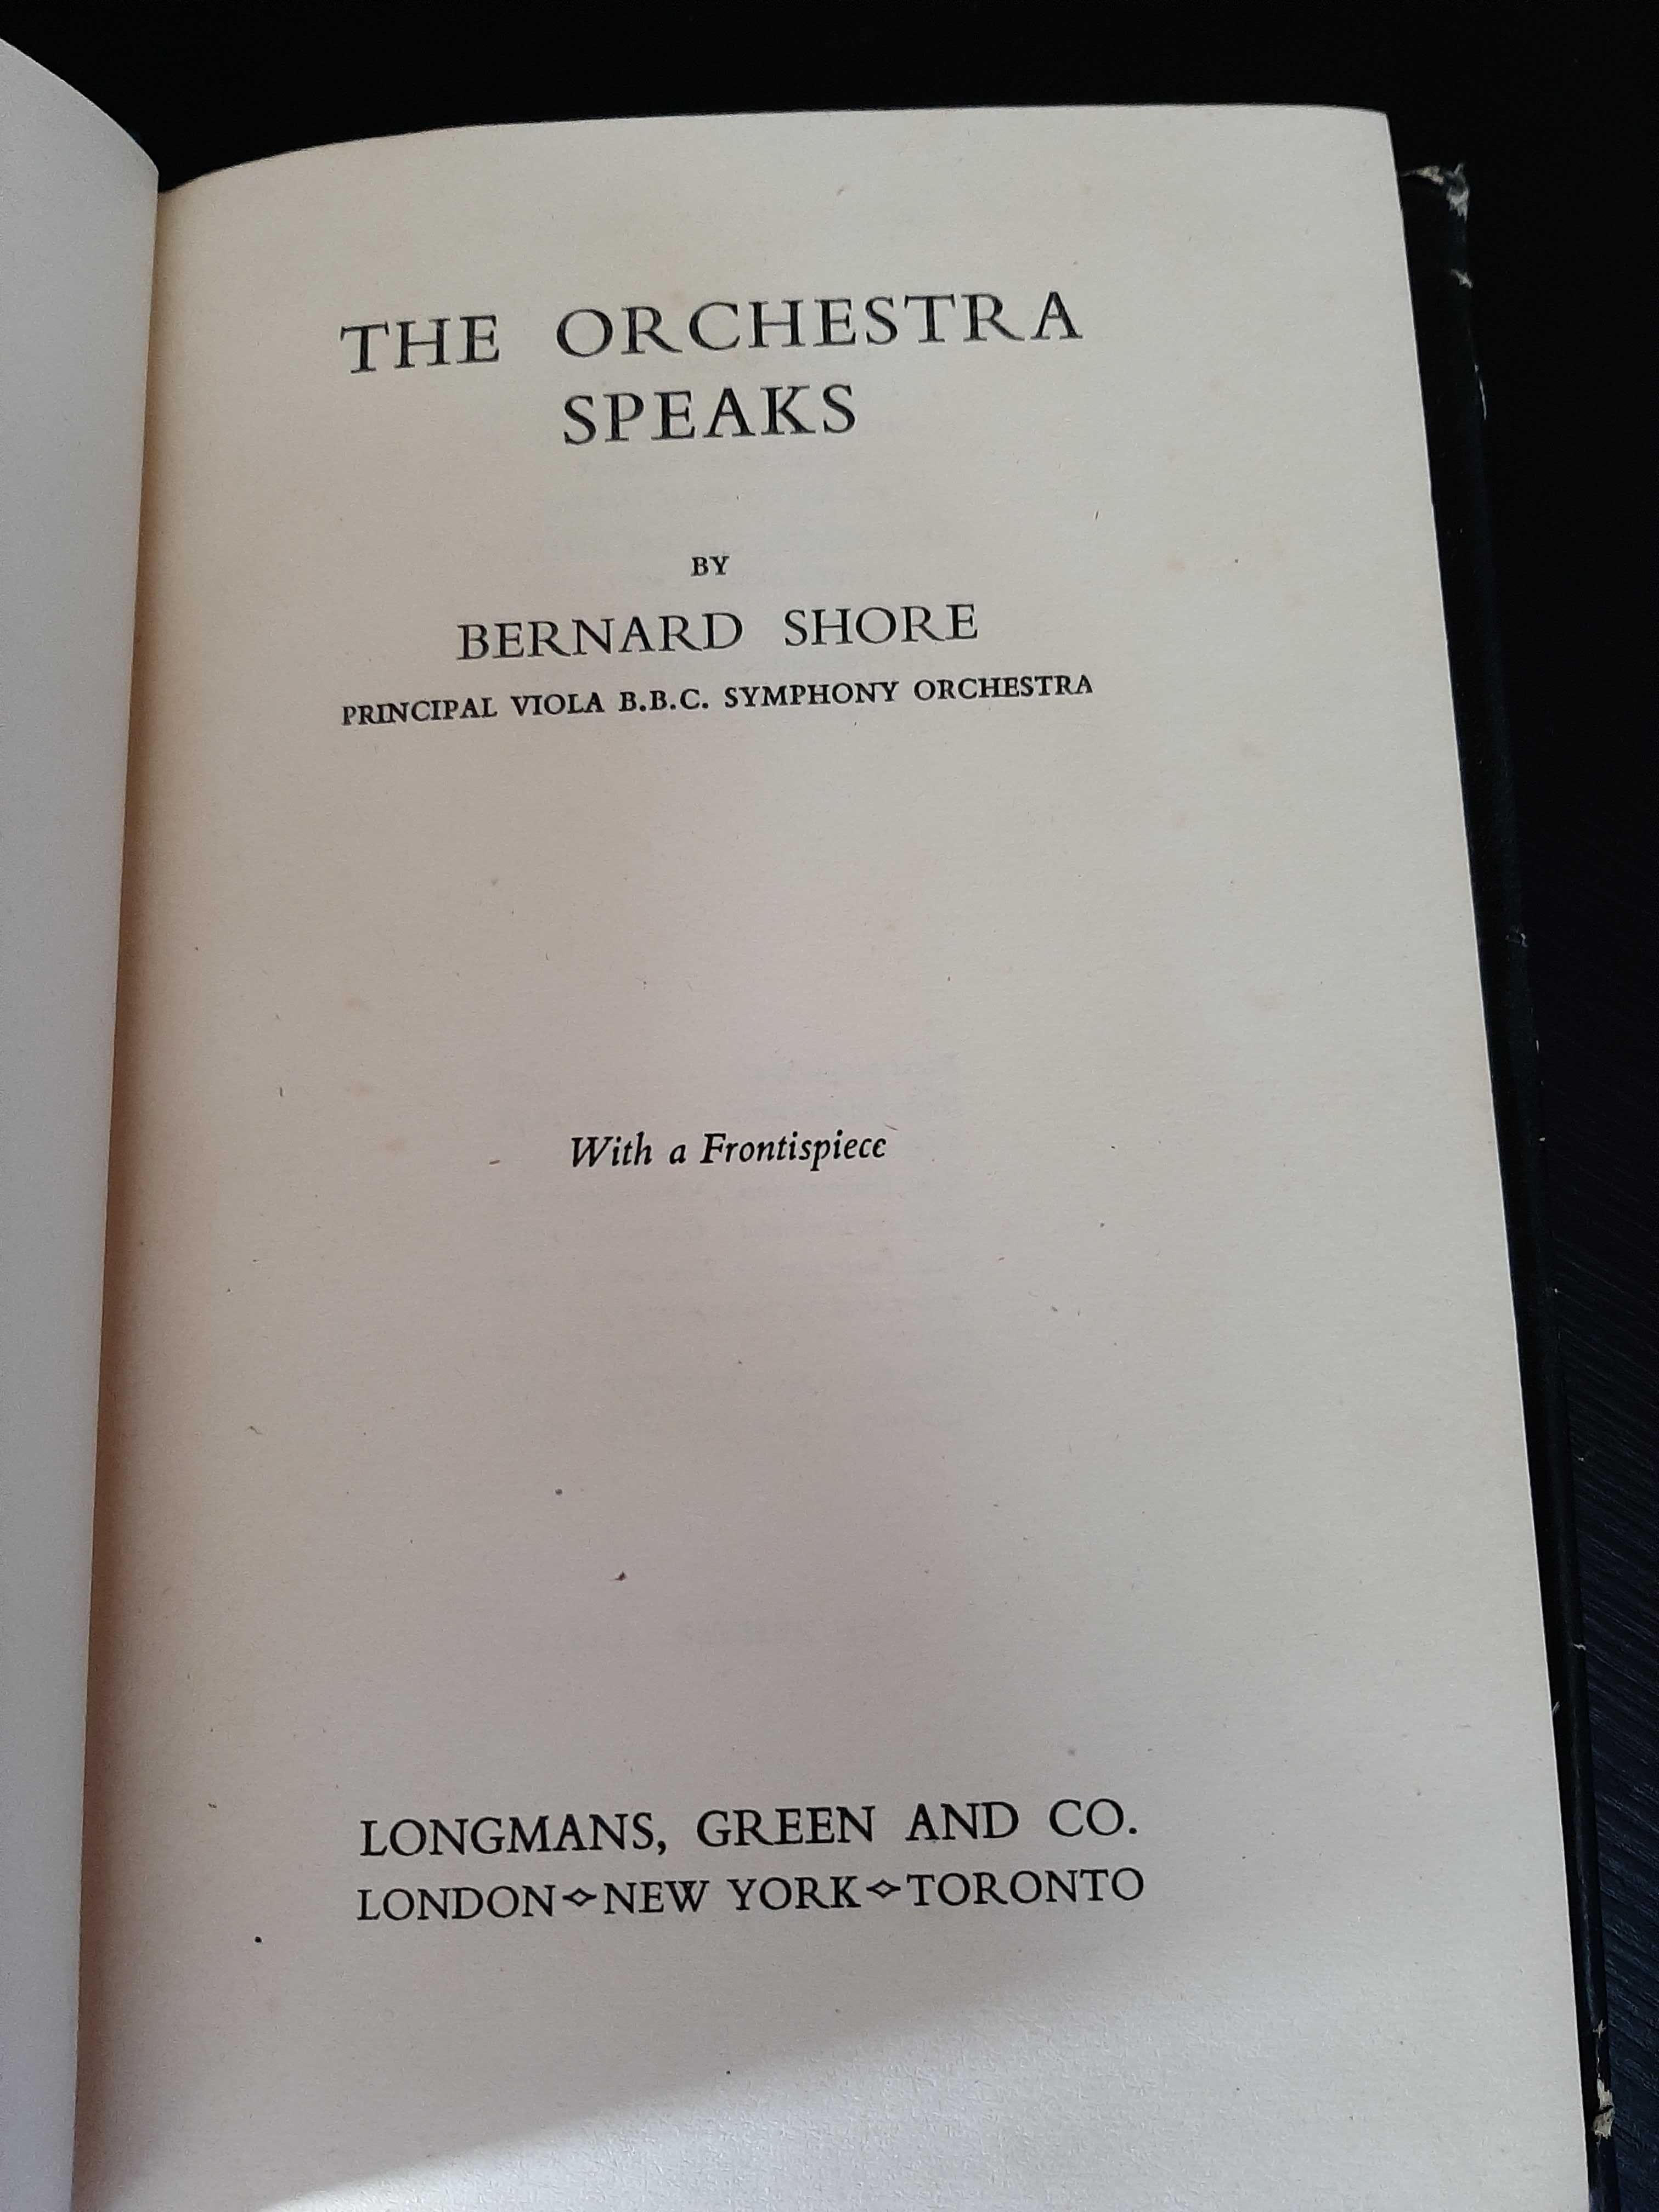 Bernard Shore – The Orchestra Speaks